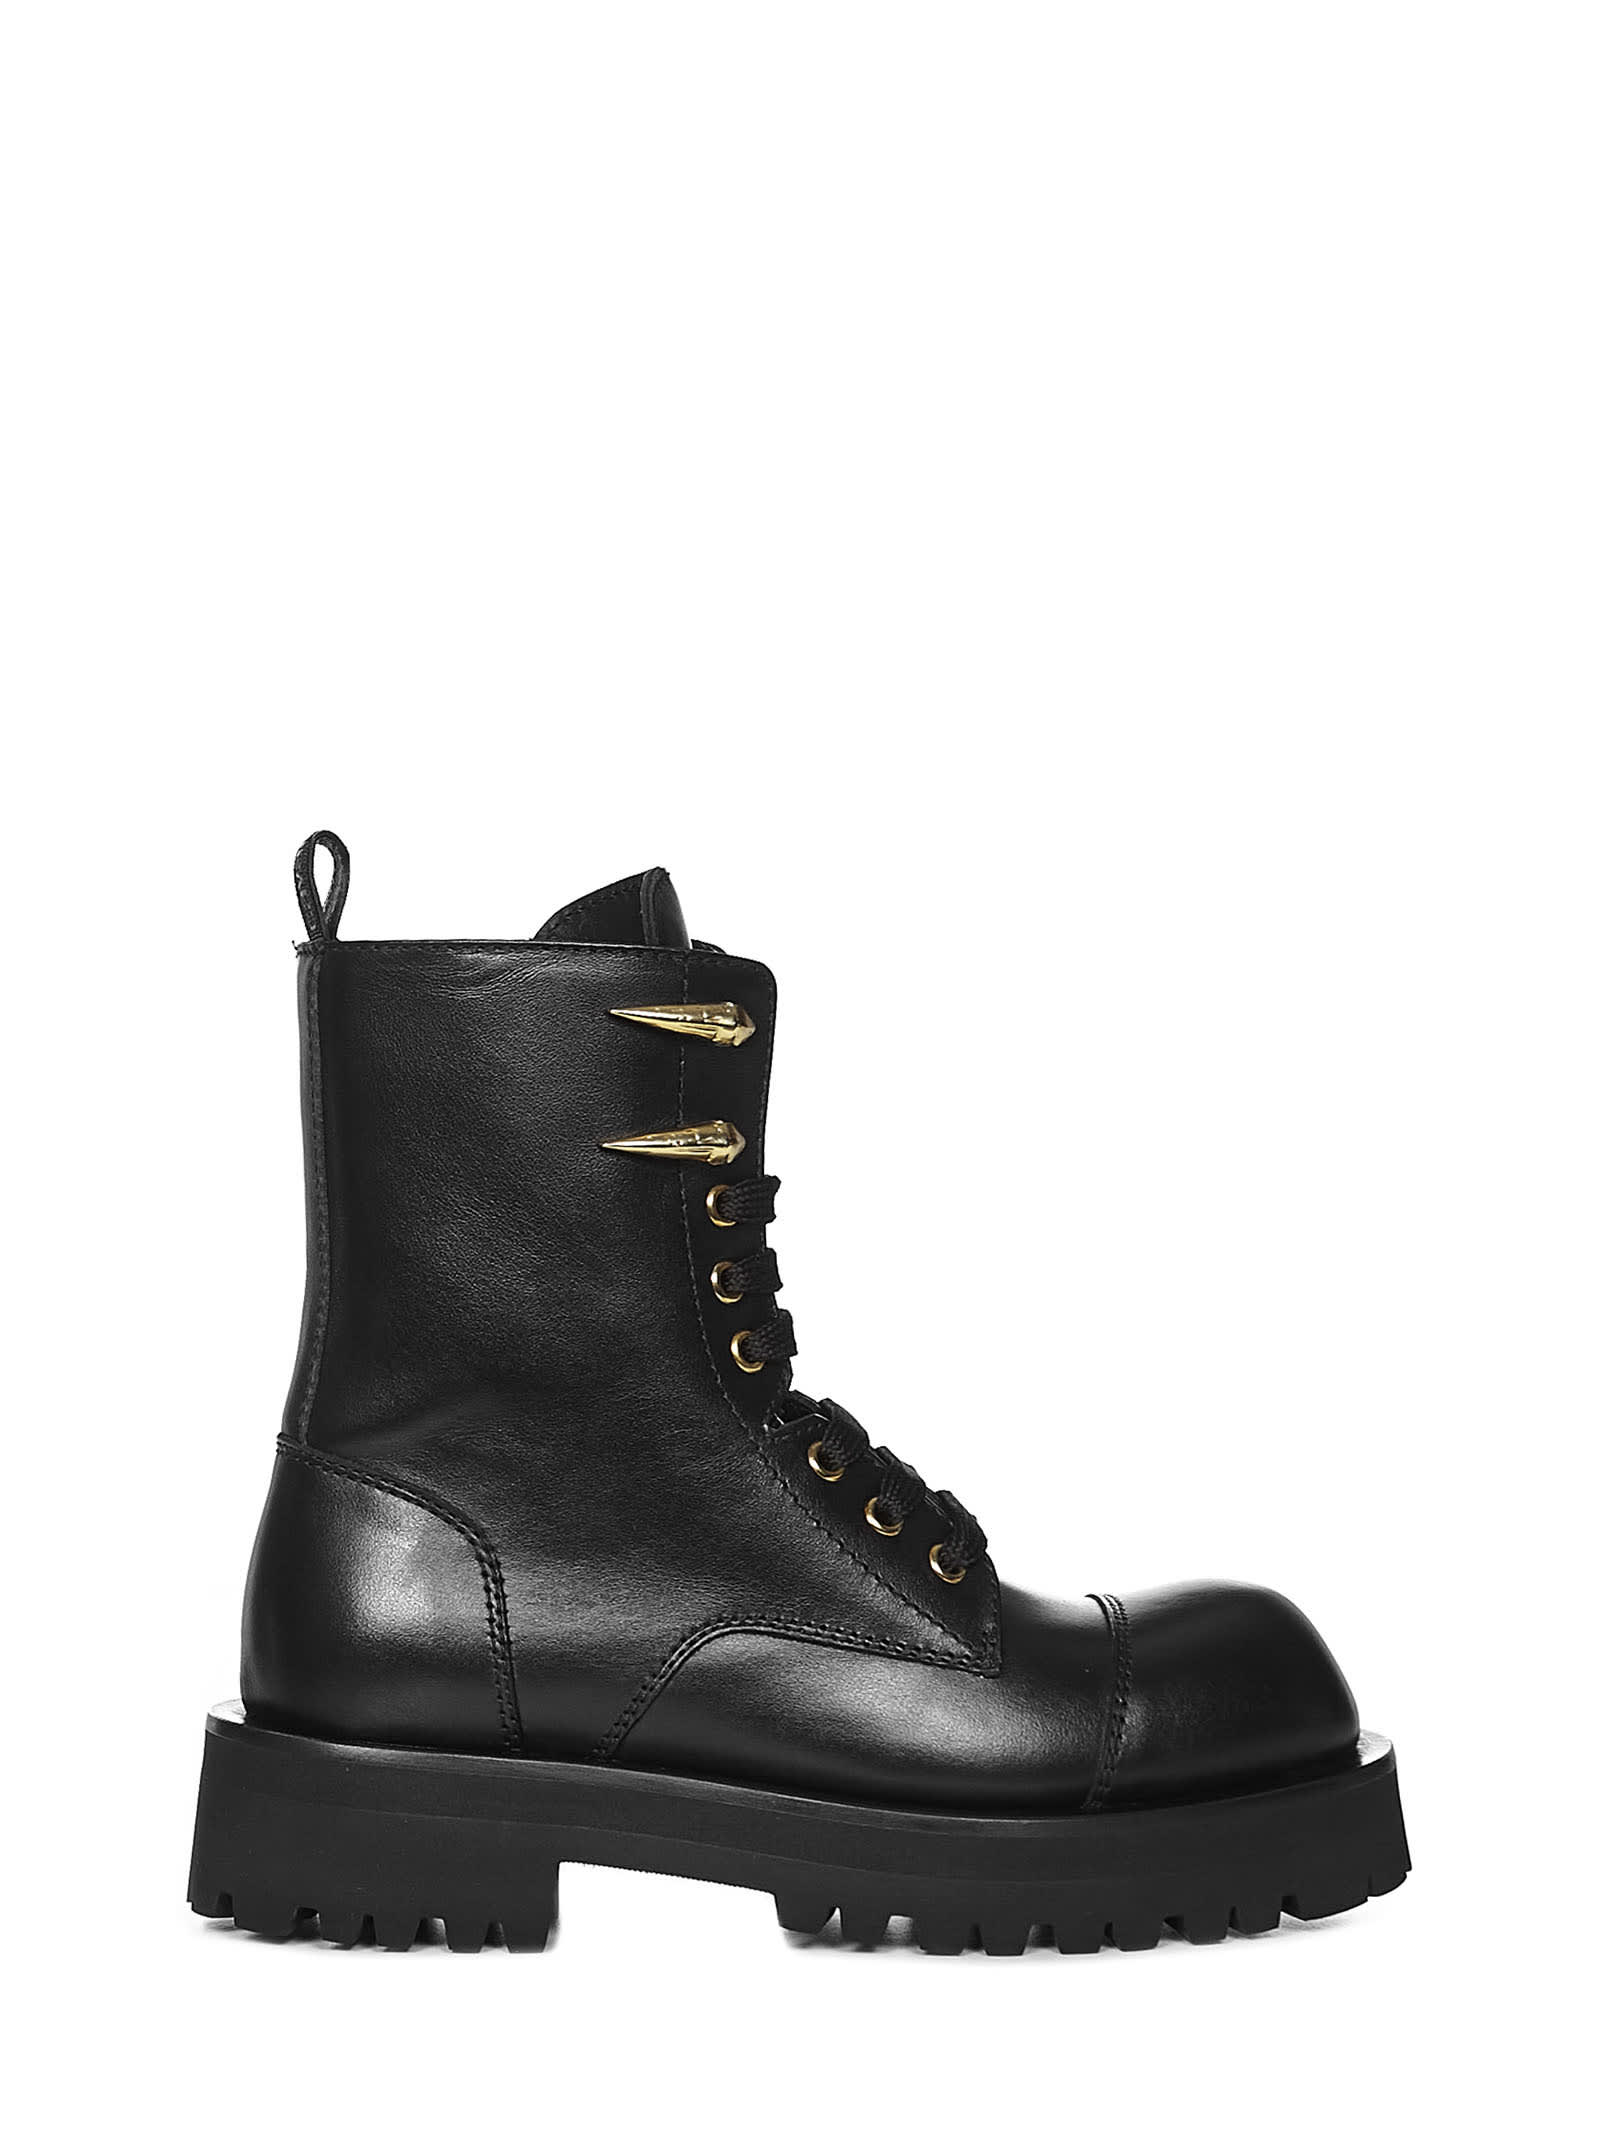 Roberto Cavalli Boots In Black | ModeSens